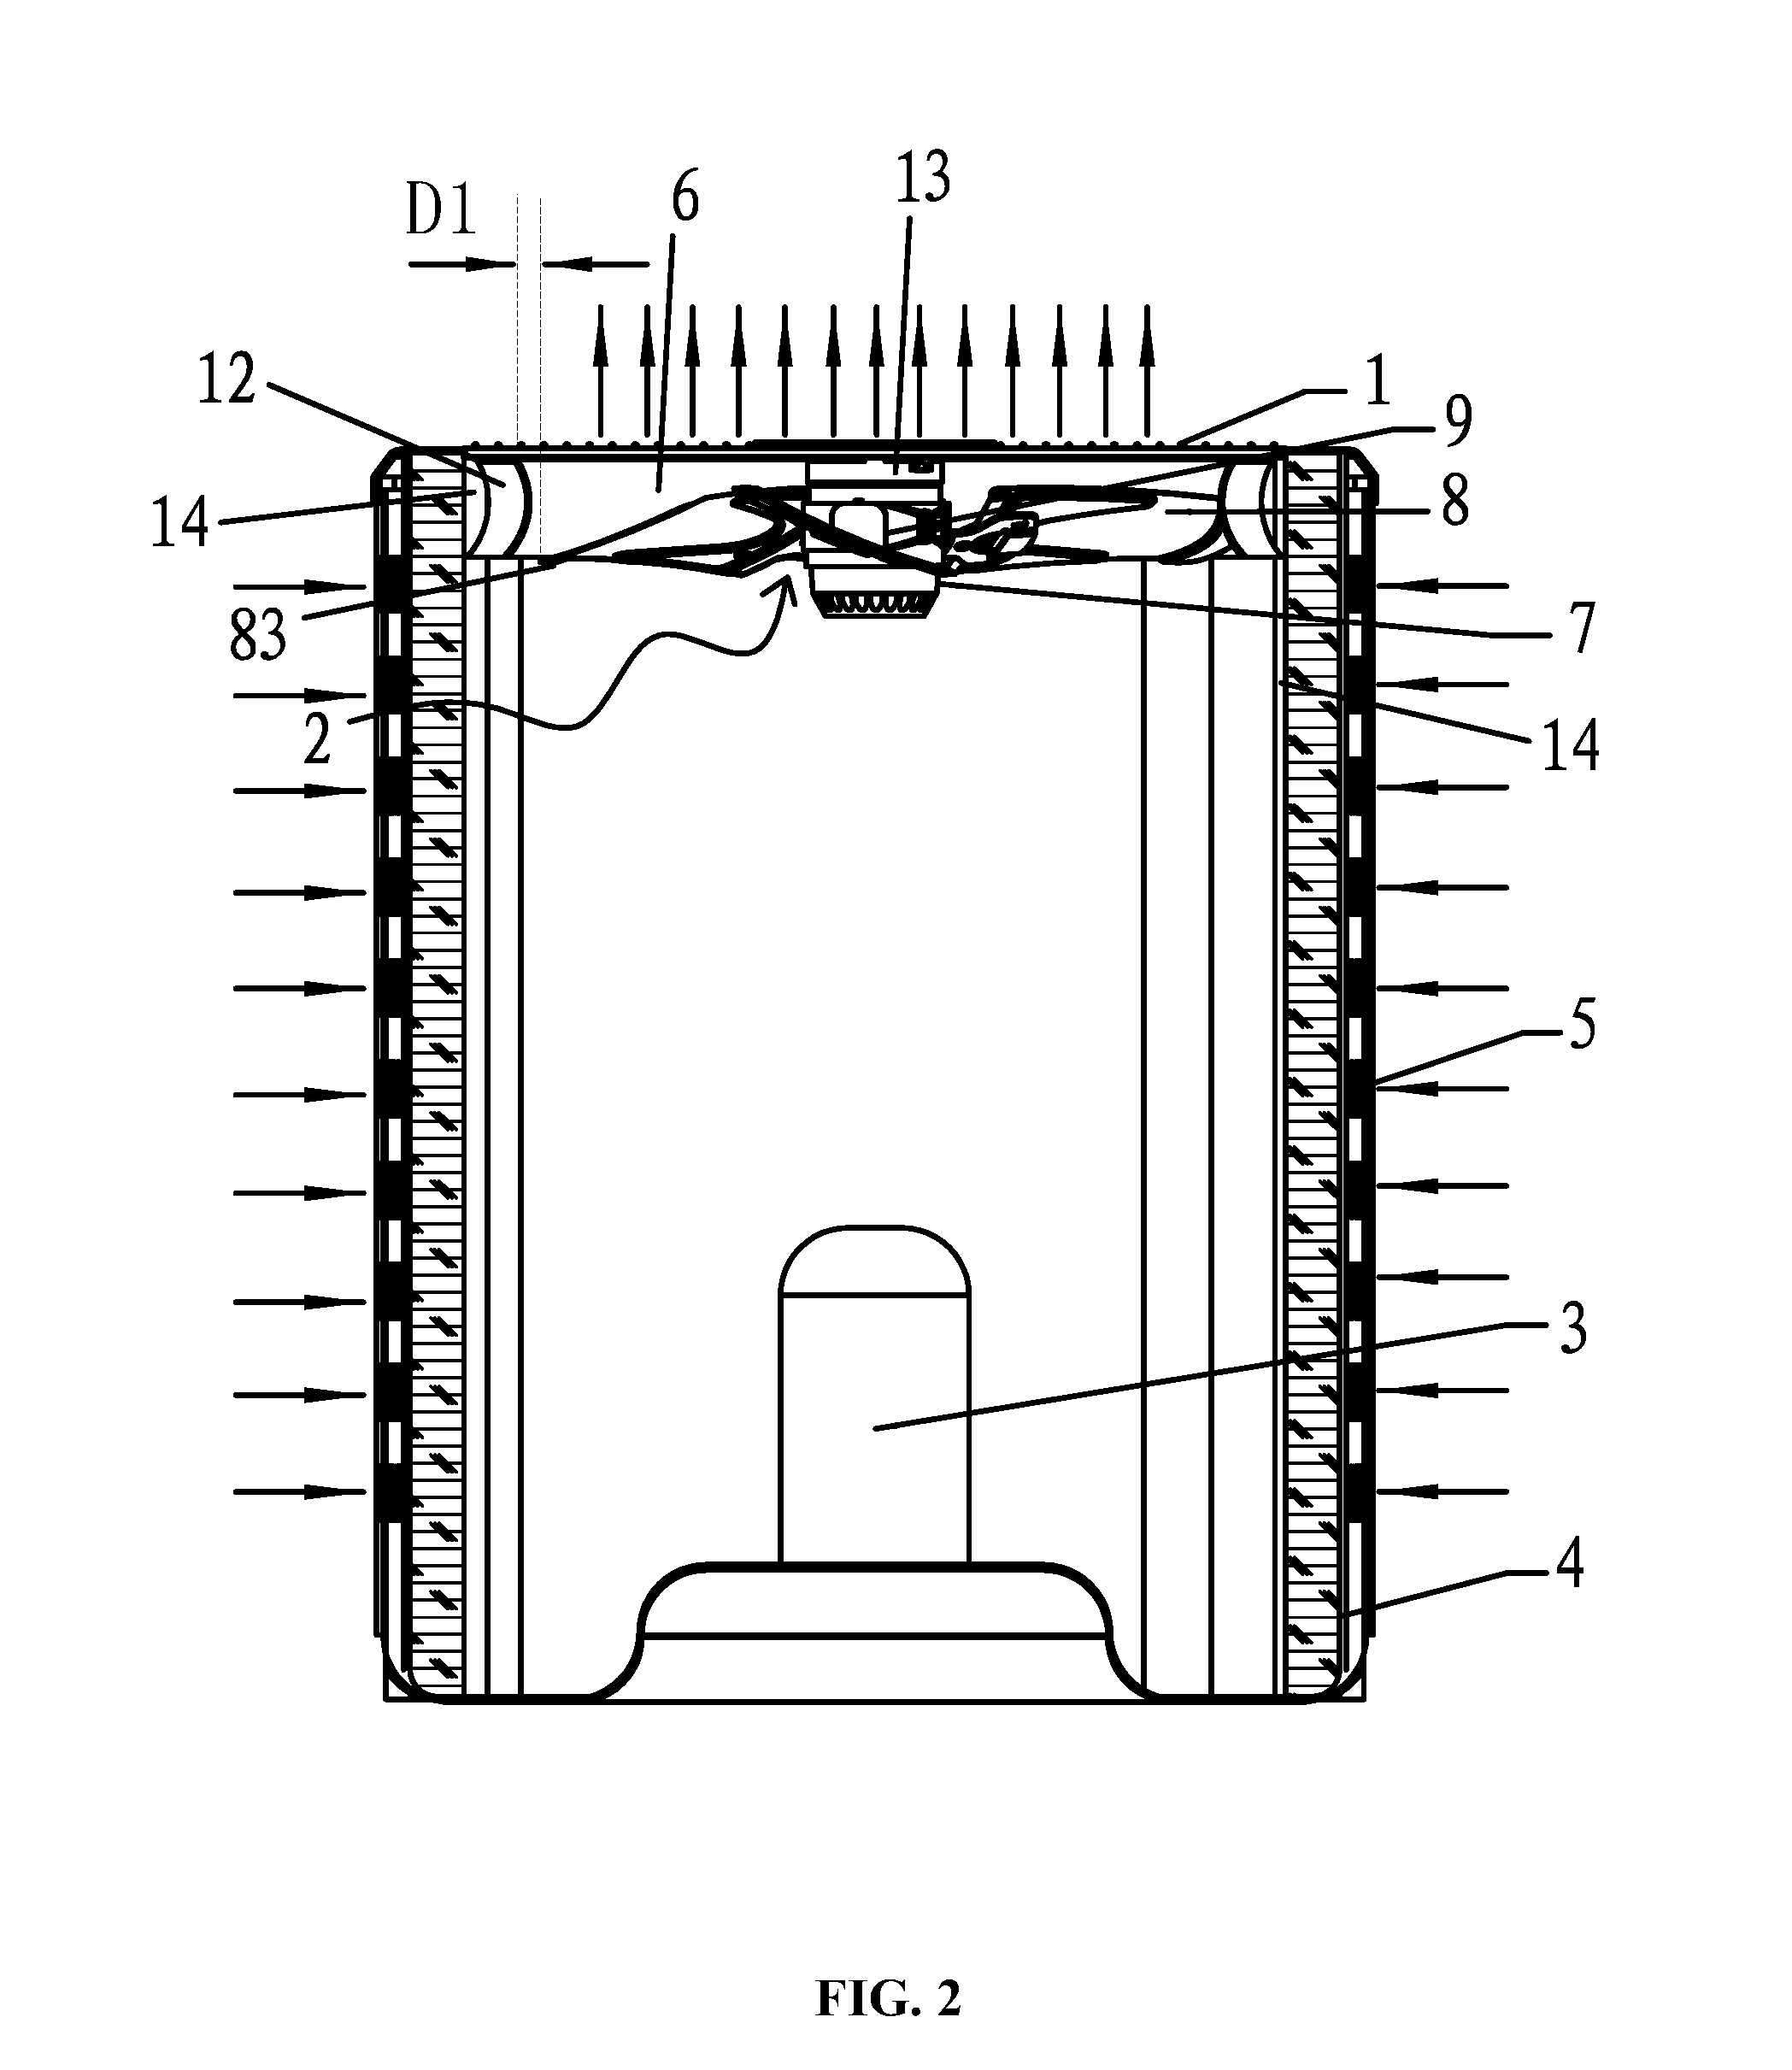 Heat exchange system using an external rotor motor